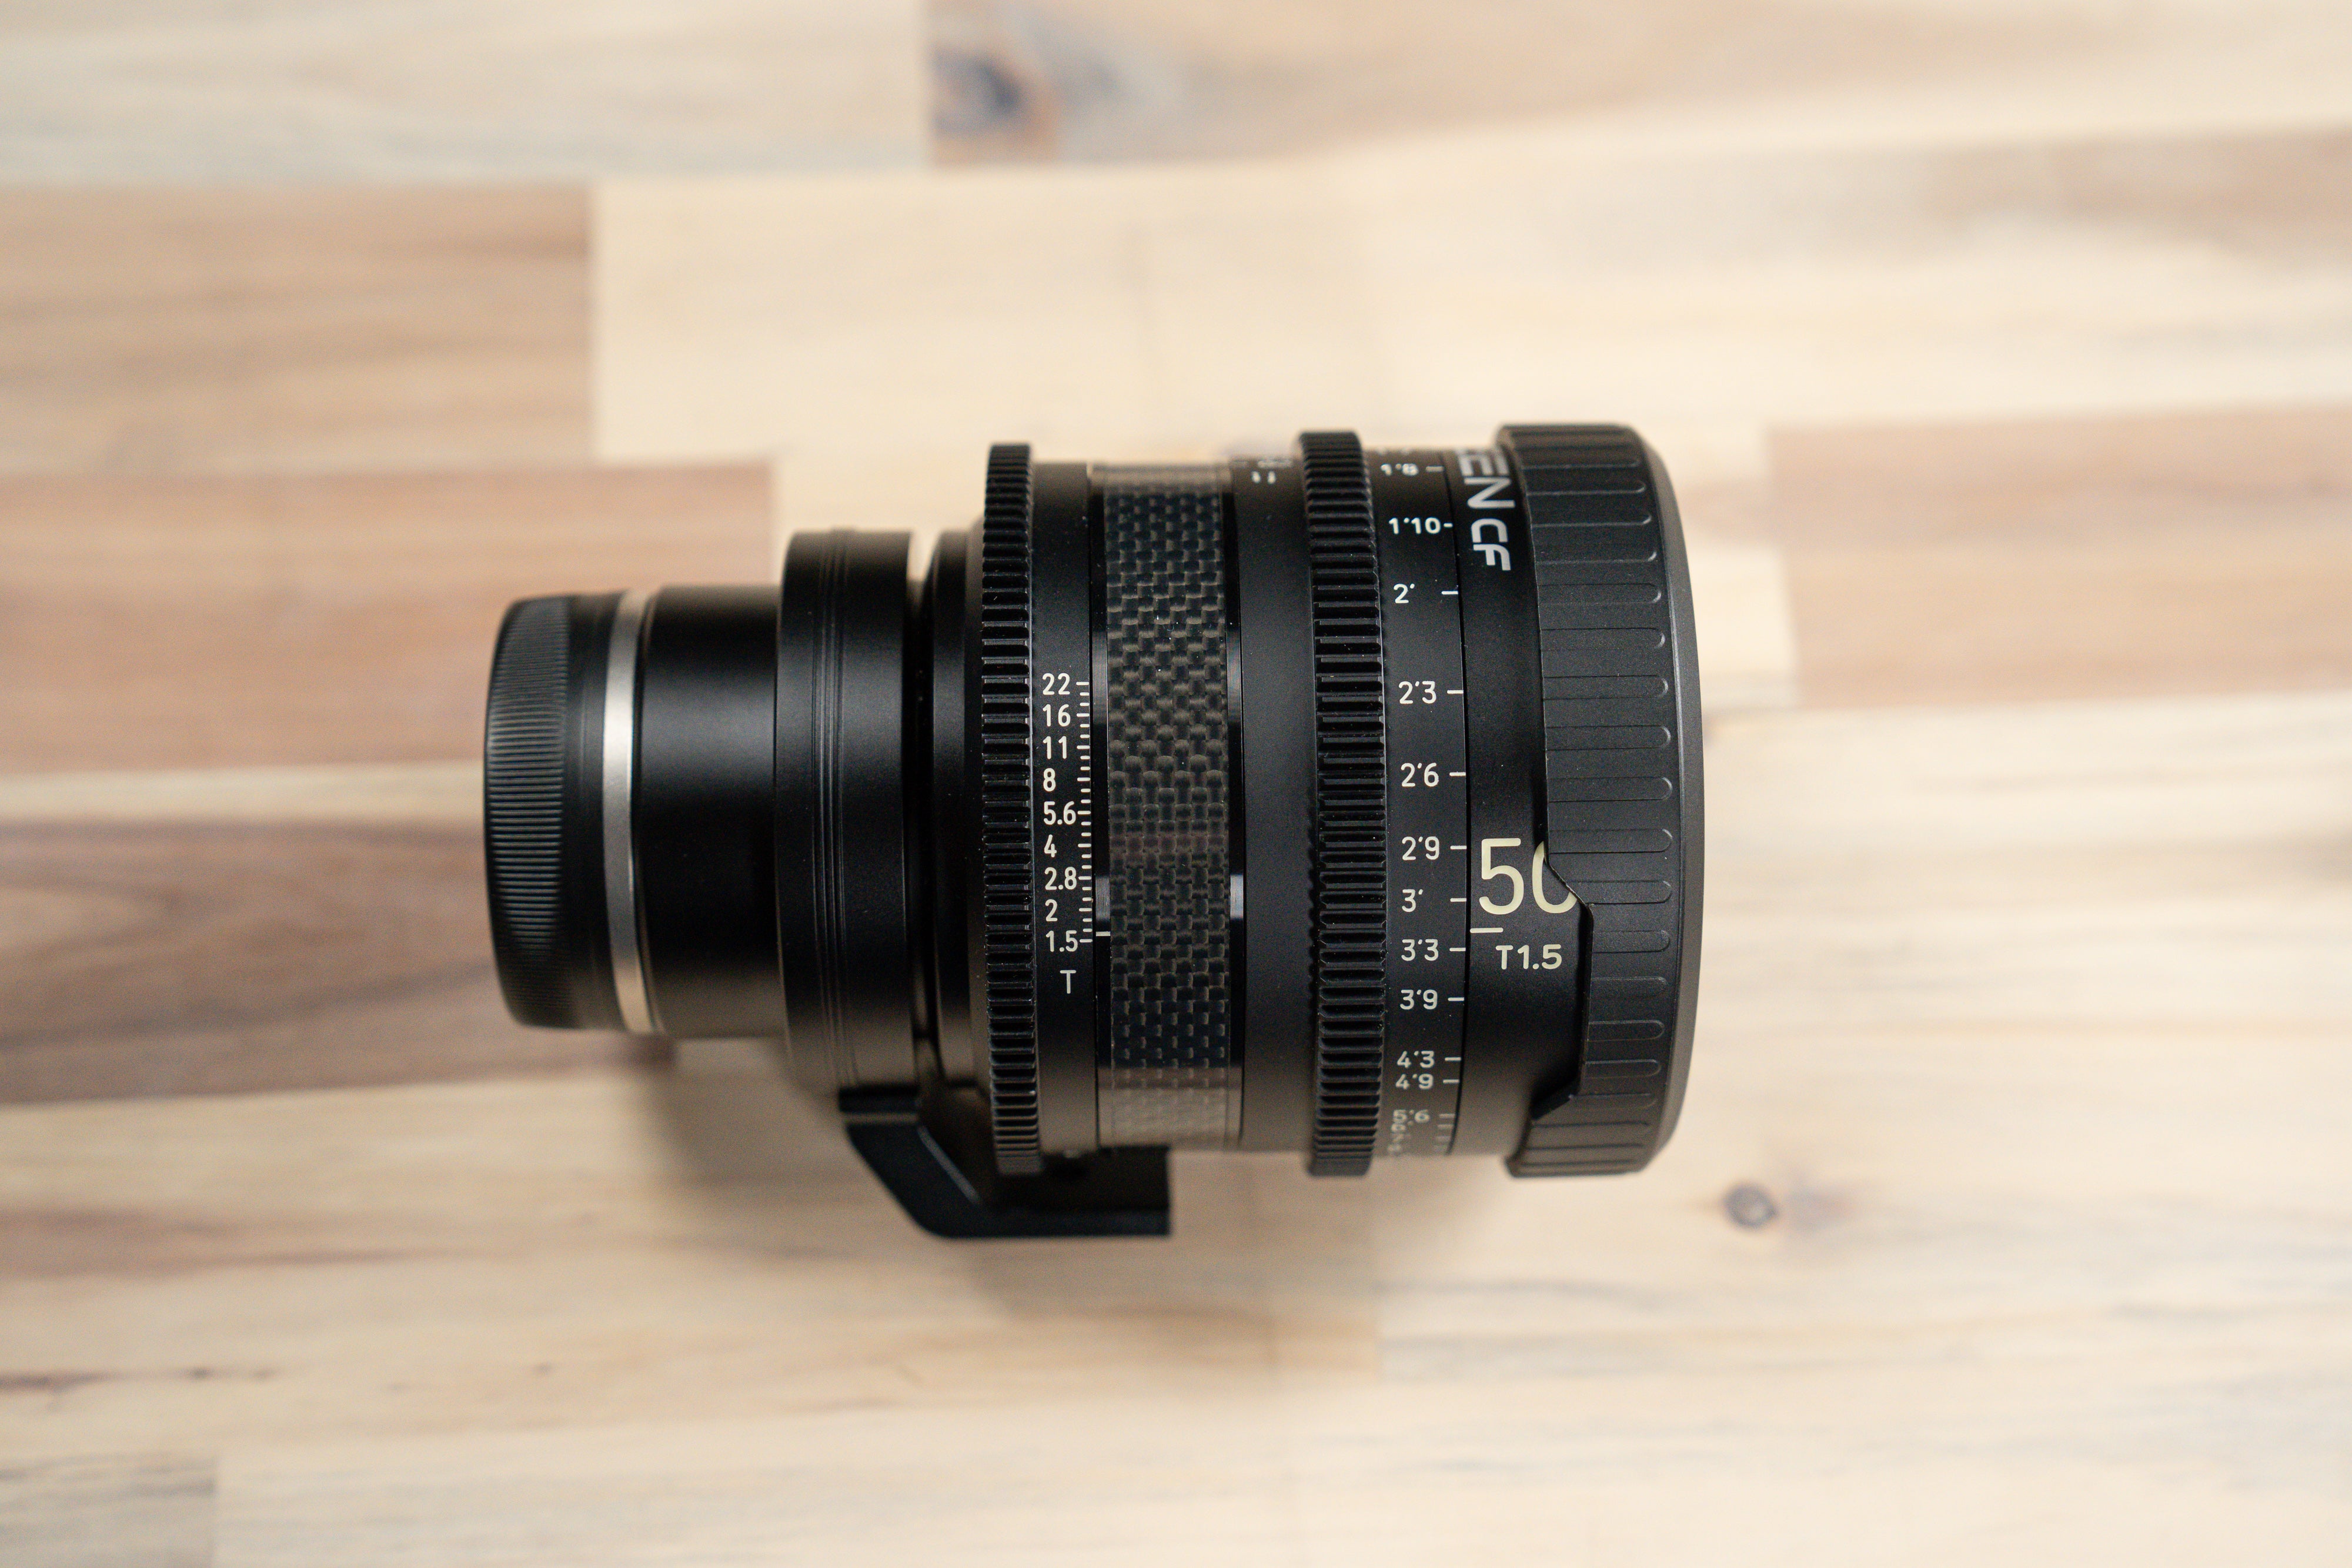 ROKINON XEEN Cf 50mm T1.5 Pro Cinema Lens with Carbon Fiber Construction & Luminous Markings for Sony E Mount